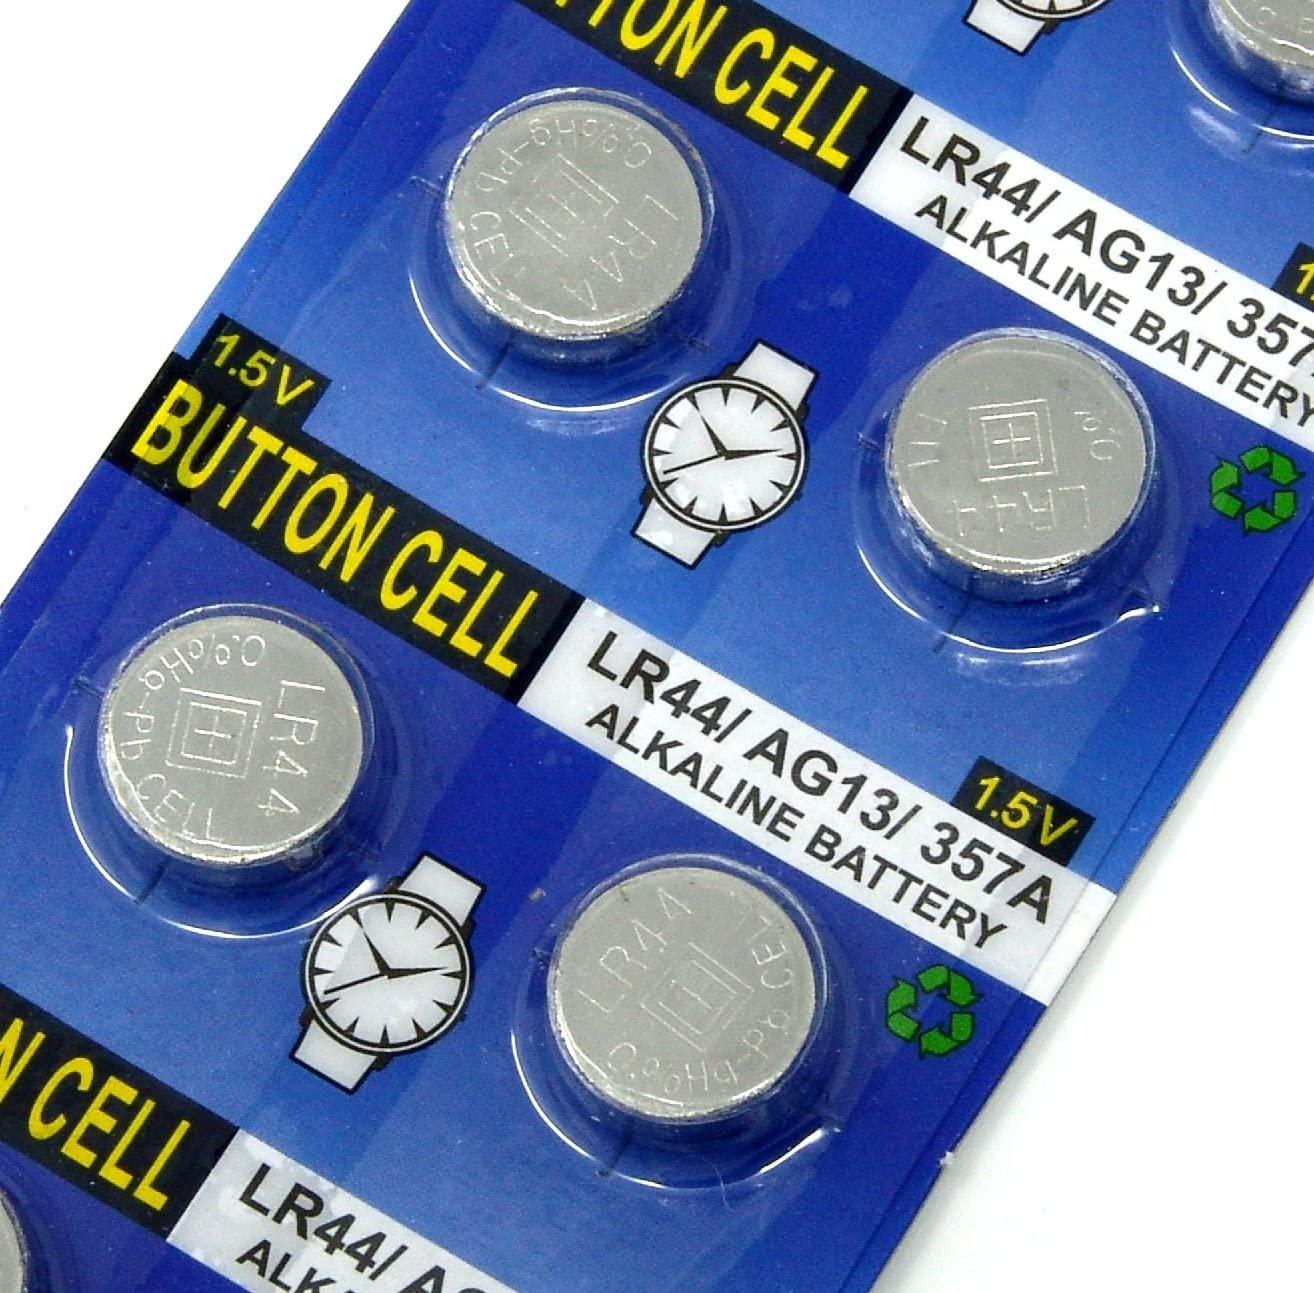 AG13 / 357A / LR44 Alkaline Button Cell Battery (Qty. 2)